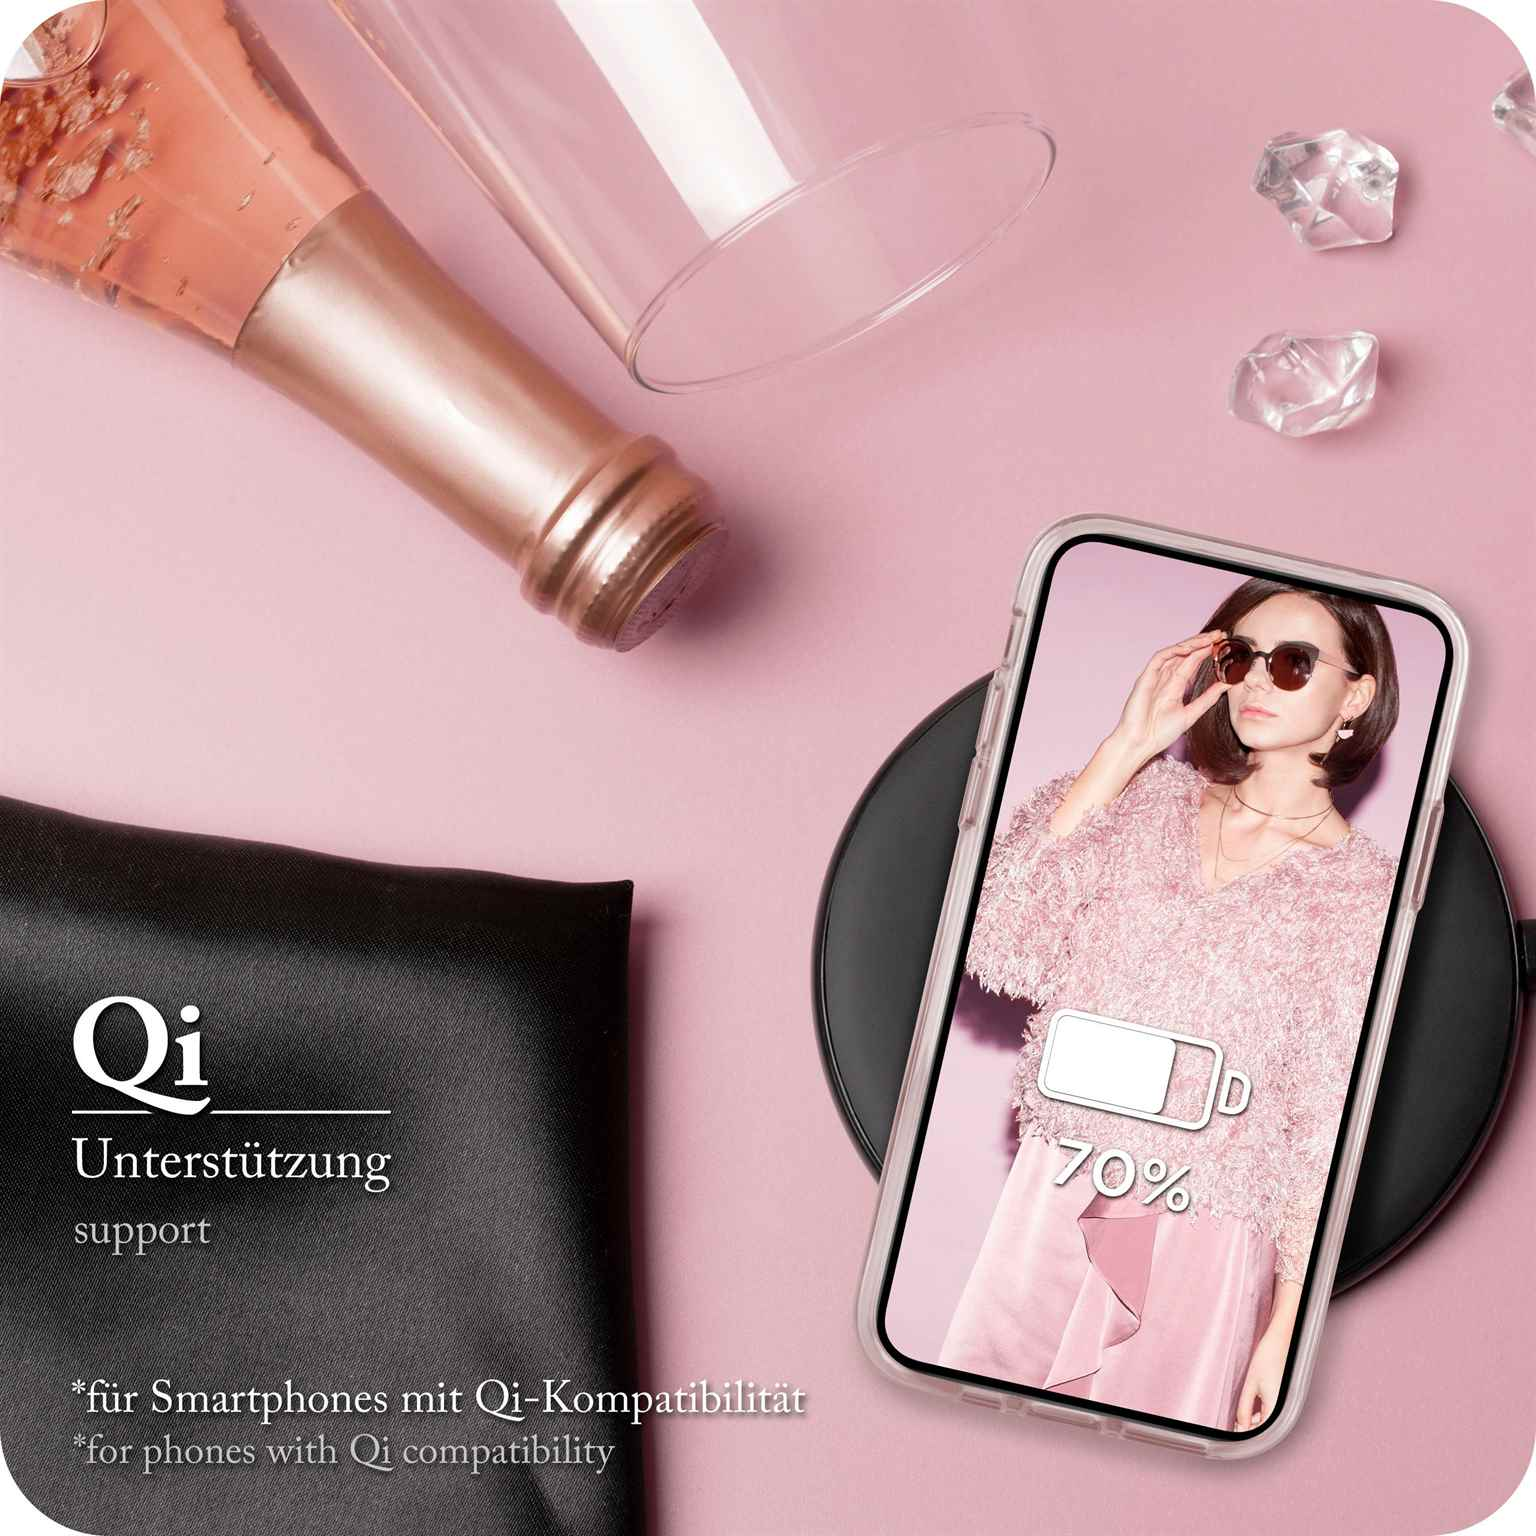 ONEFLOW Glitter Case, Backcover, Samsung, Gloss Rosé - S9, Galaxy